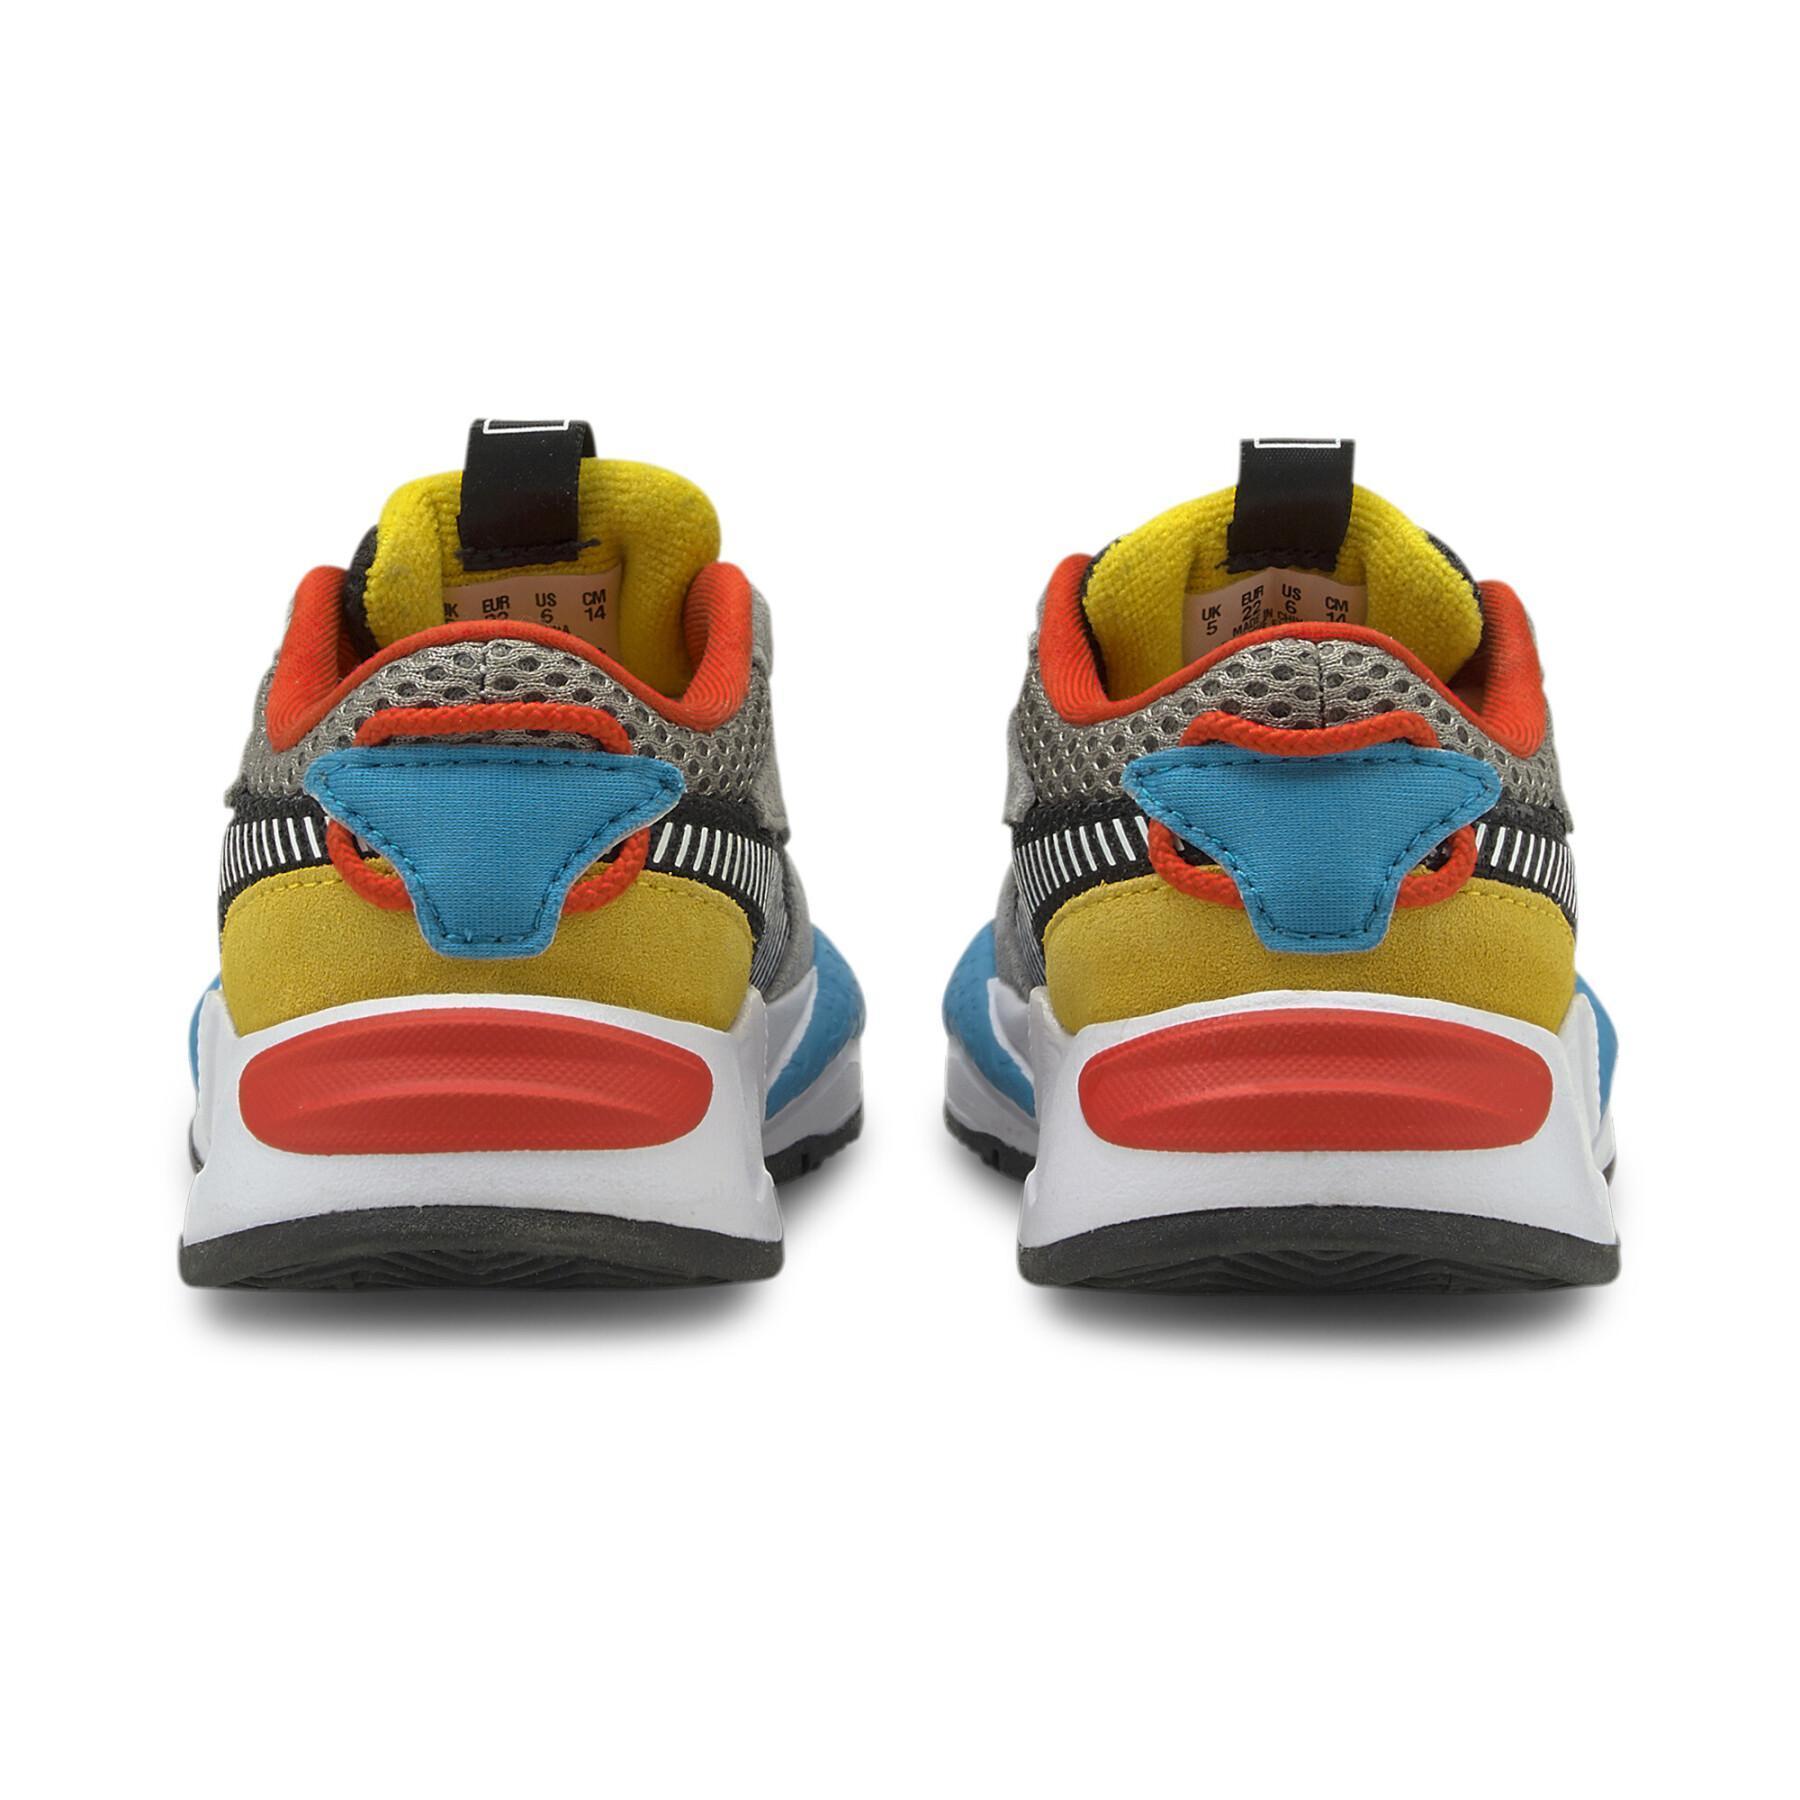 Children's sneakers Puma RS-Z AC